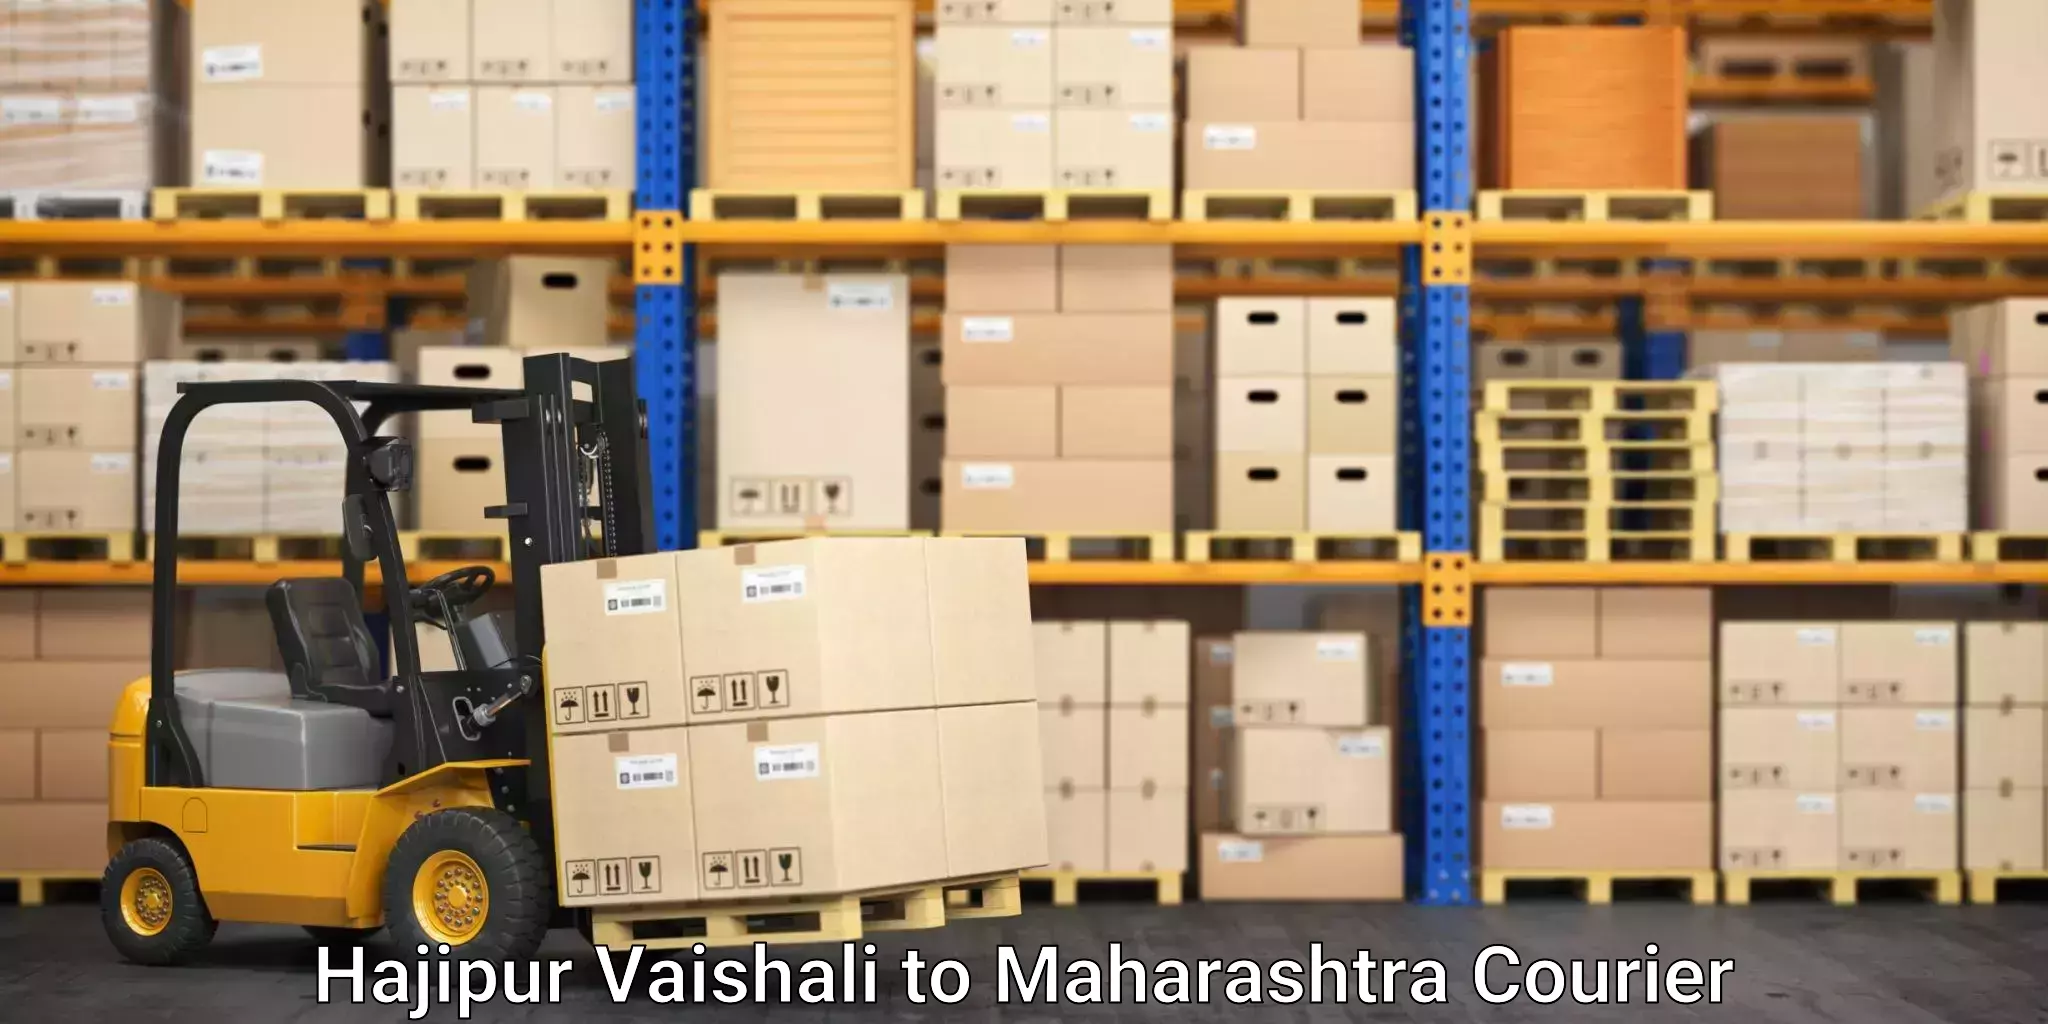 Moving and storage services Hajipur Vaishali to Ballarpur